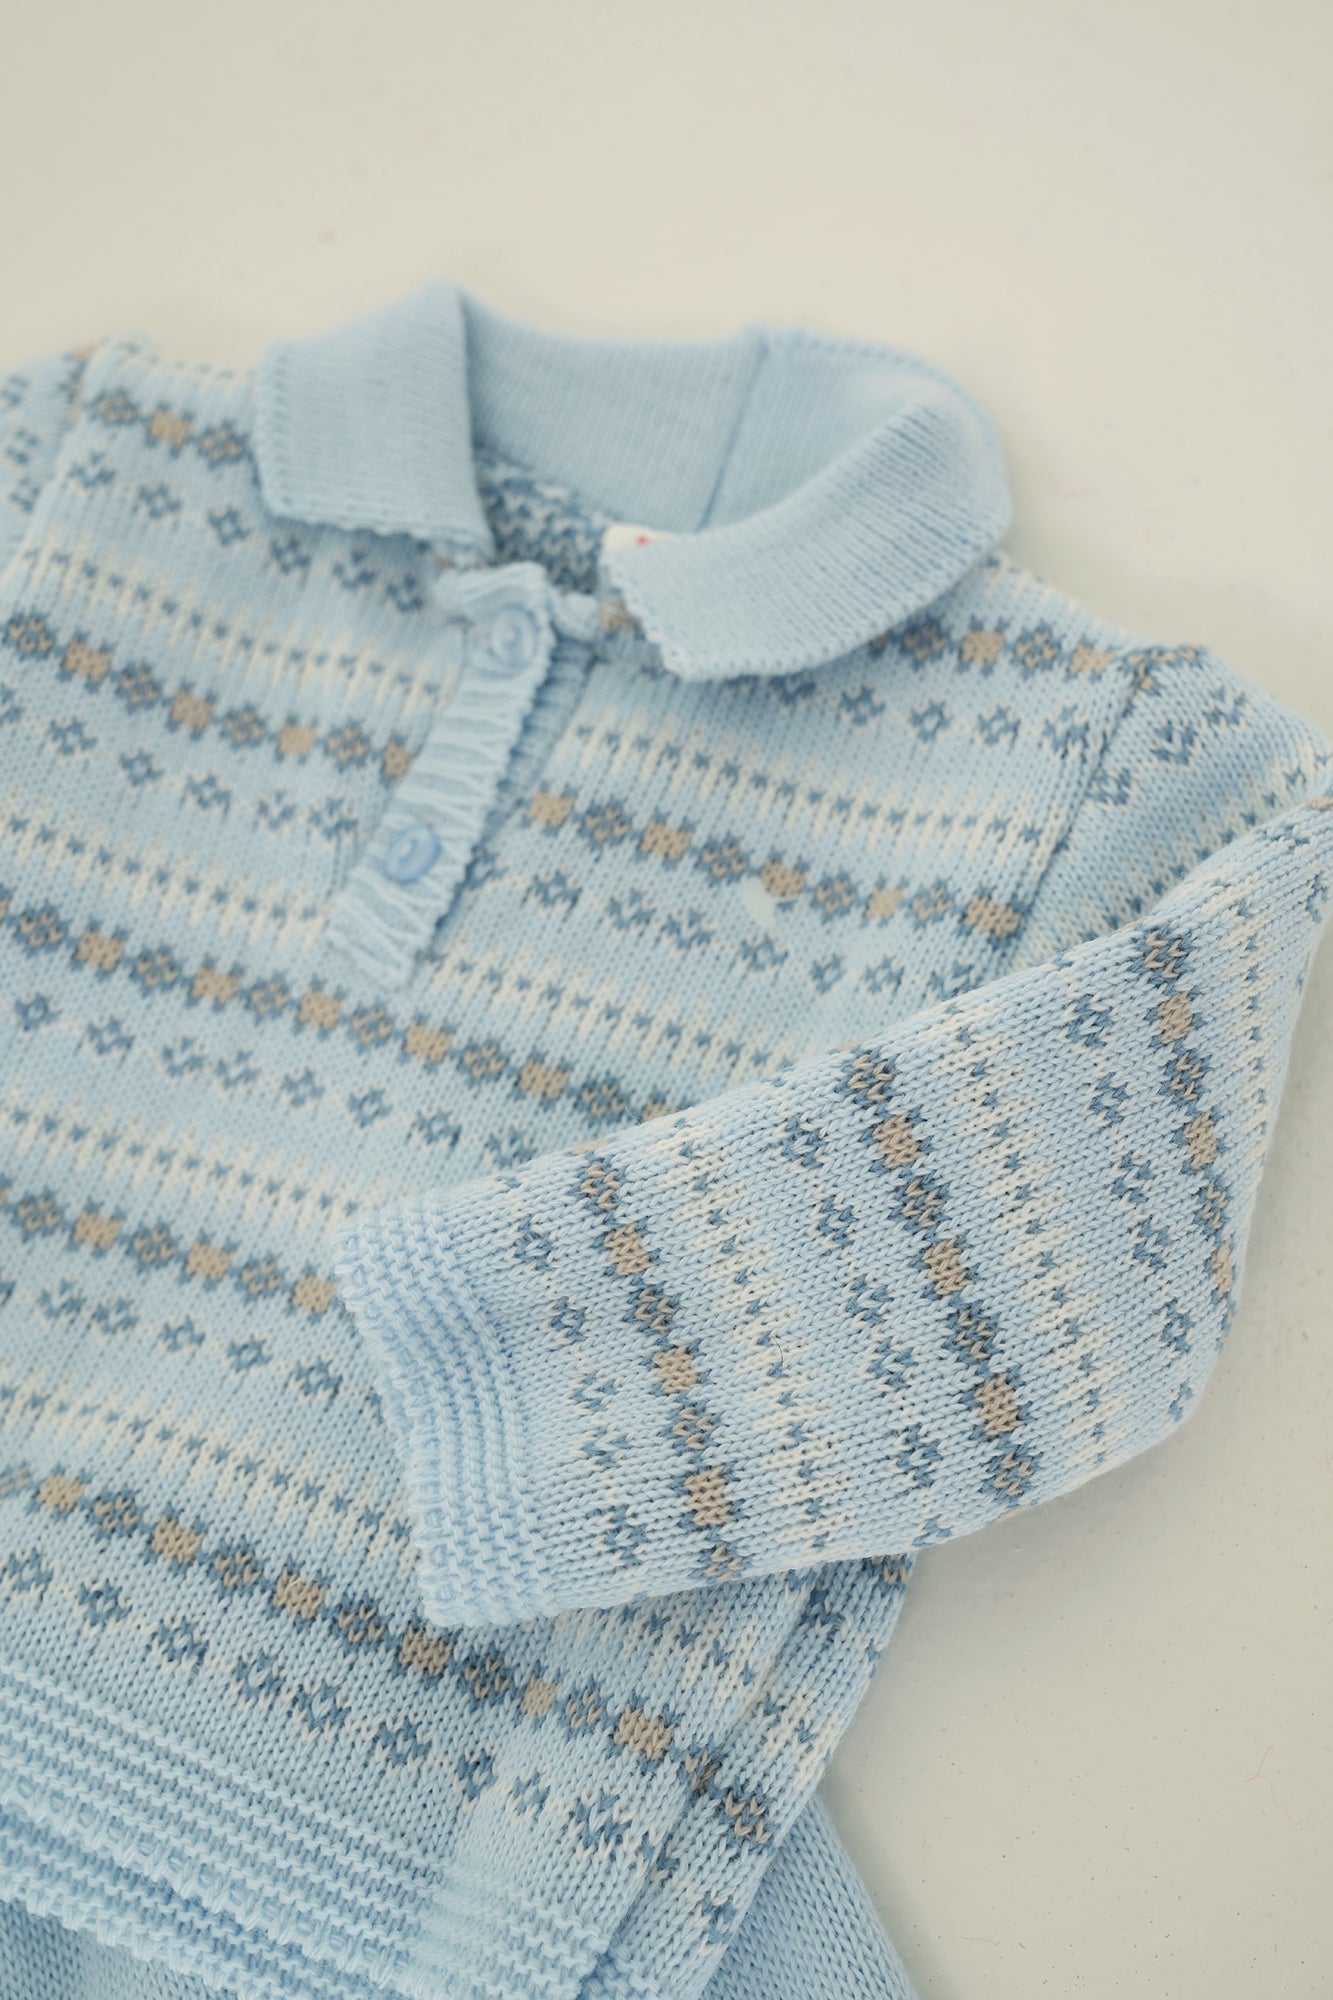 Blue Jackson Knit Set